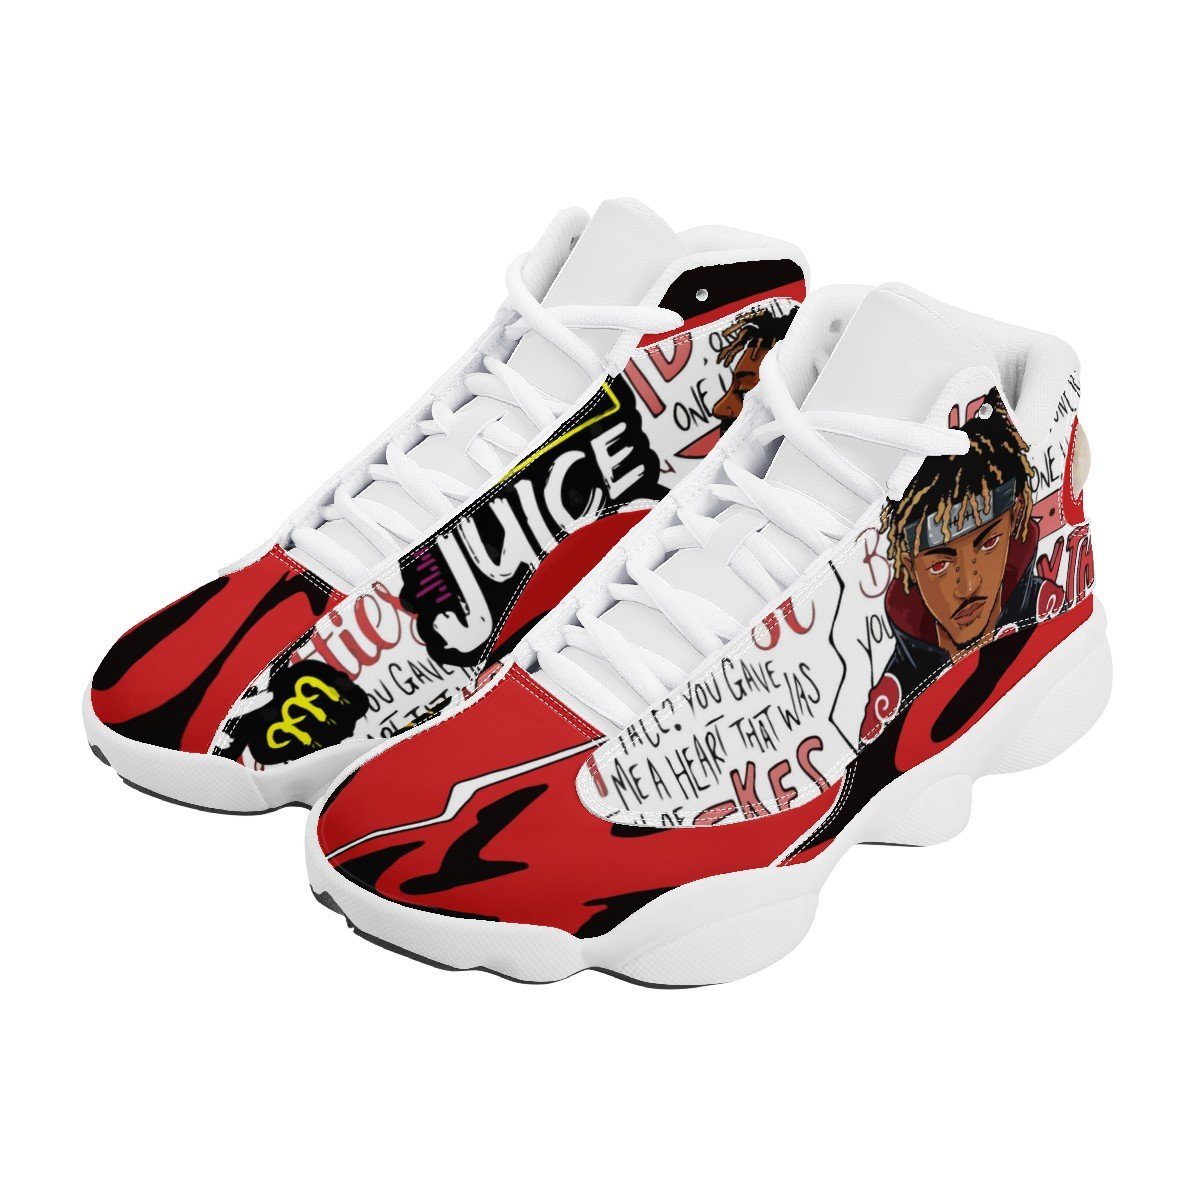 Custom Air Jordan 13 Retro - “Legends Never Die” Juice WRLD Custom